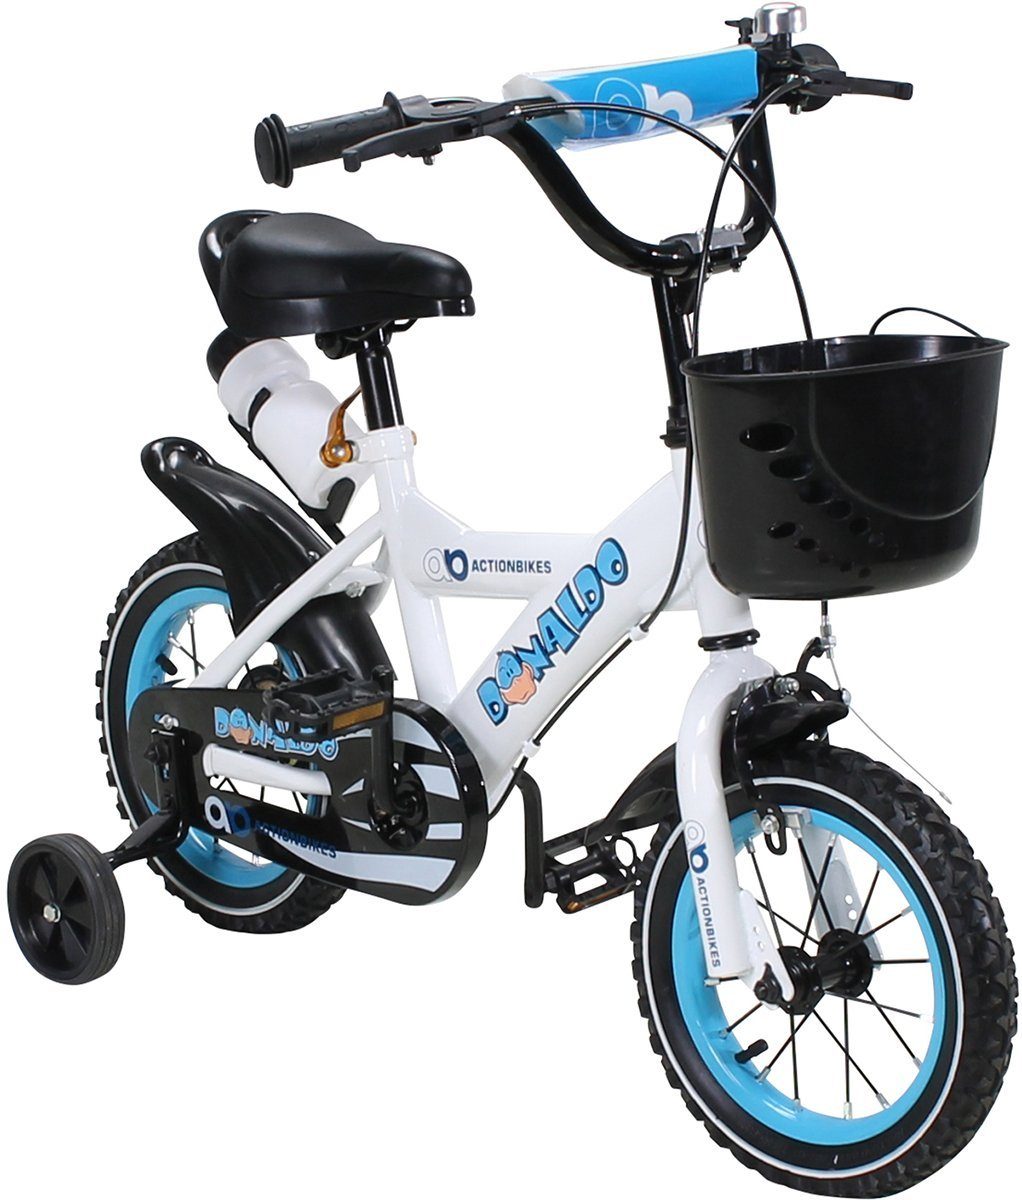 Actionbikes Motors Kinderfahrrad »Donaldo«, 1 Gang, ohne Schaltung, Kinderfahrrad  12 Zoll - Jungs Fahrrad - ab